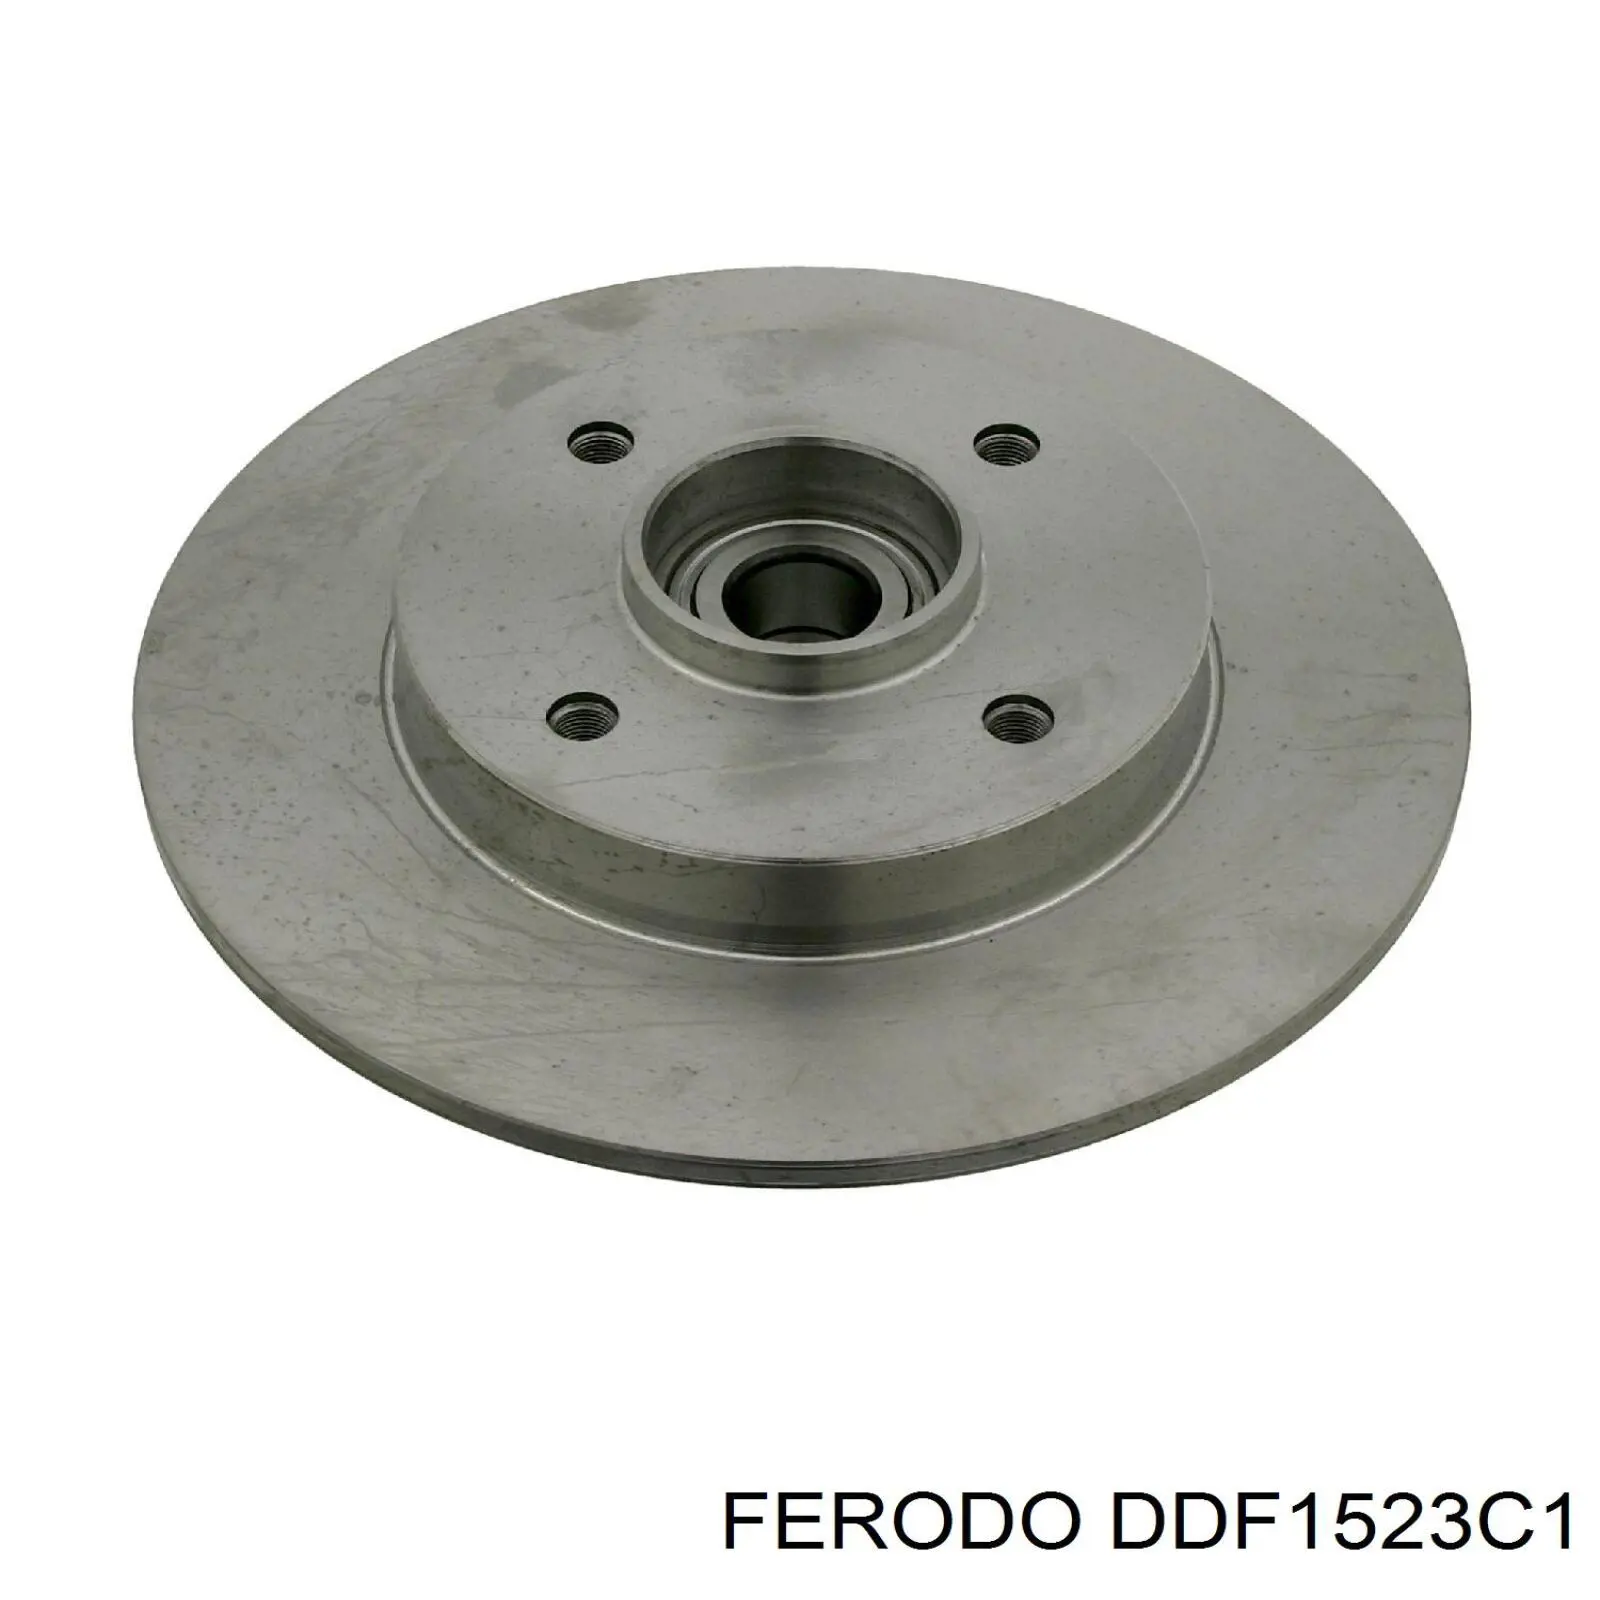 DDF1523C1 Ferodo disco de freno trasero